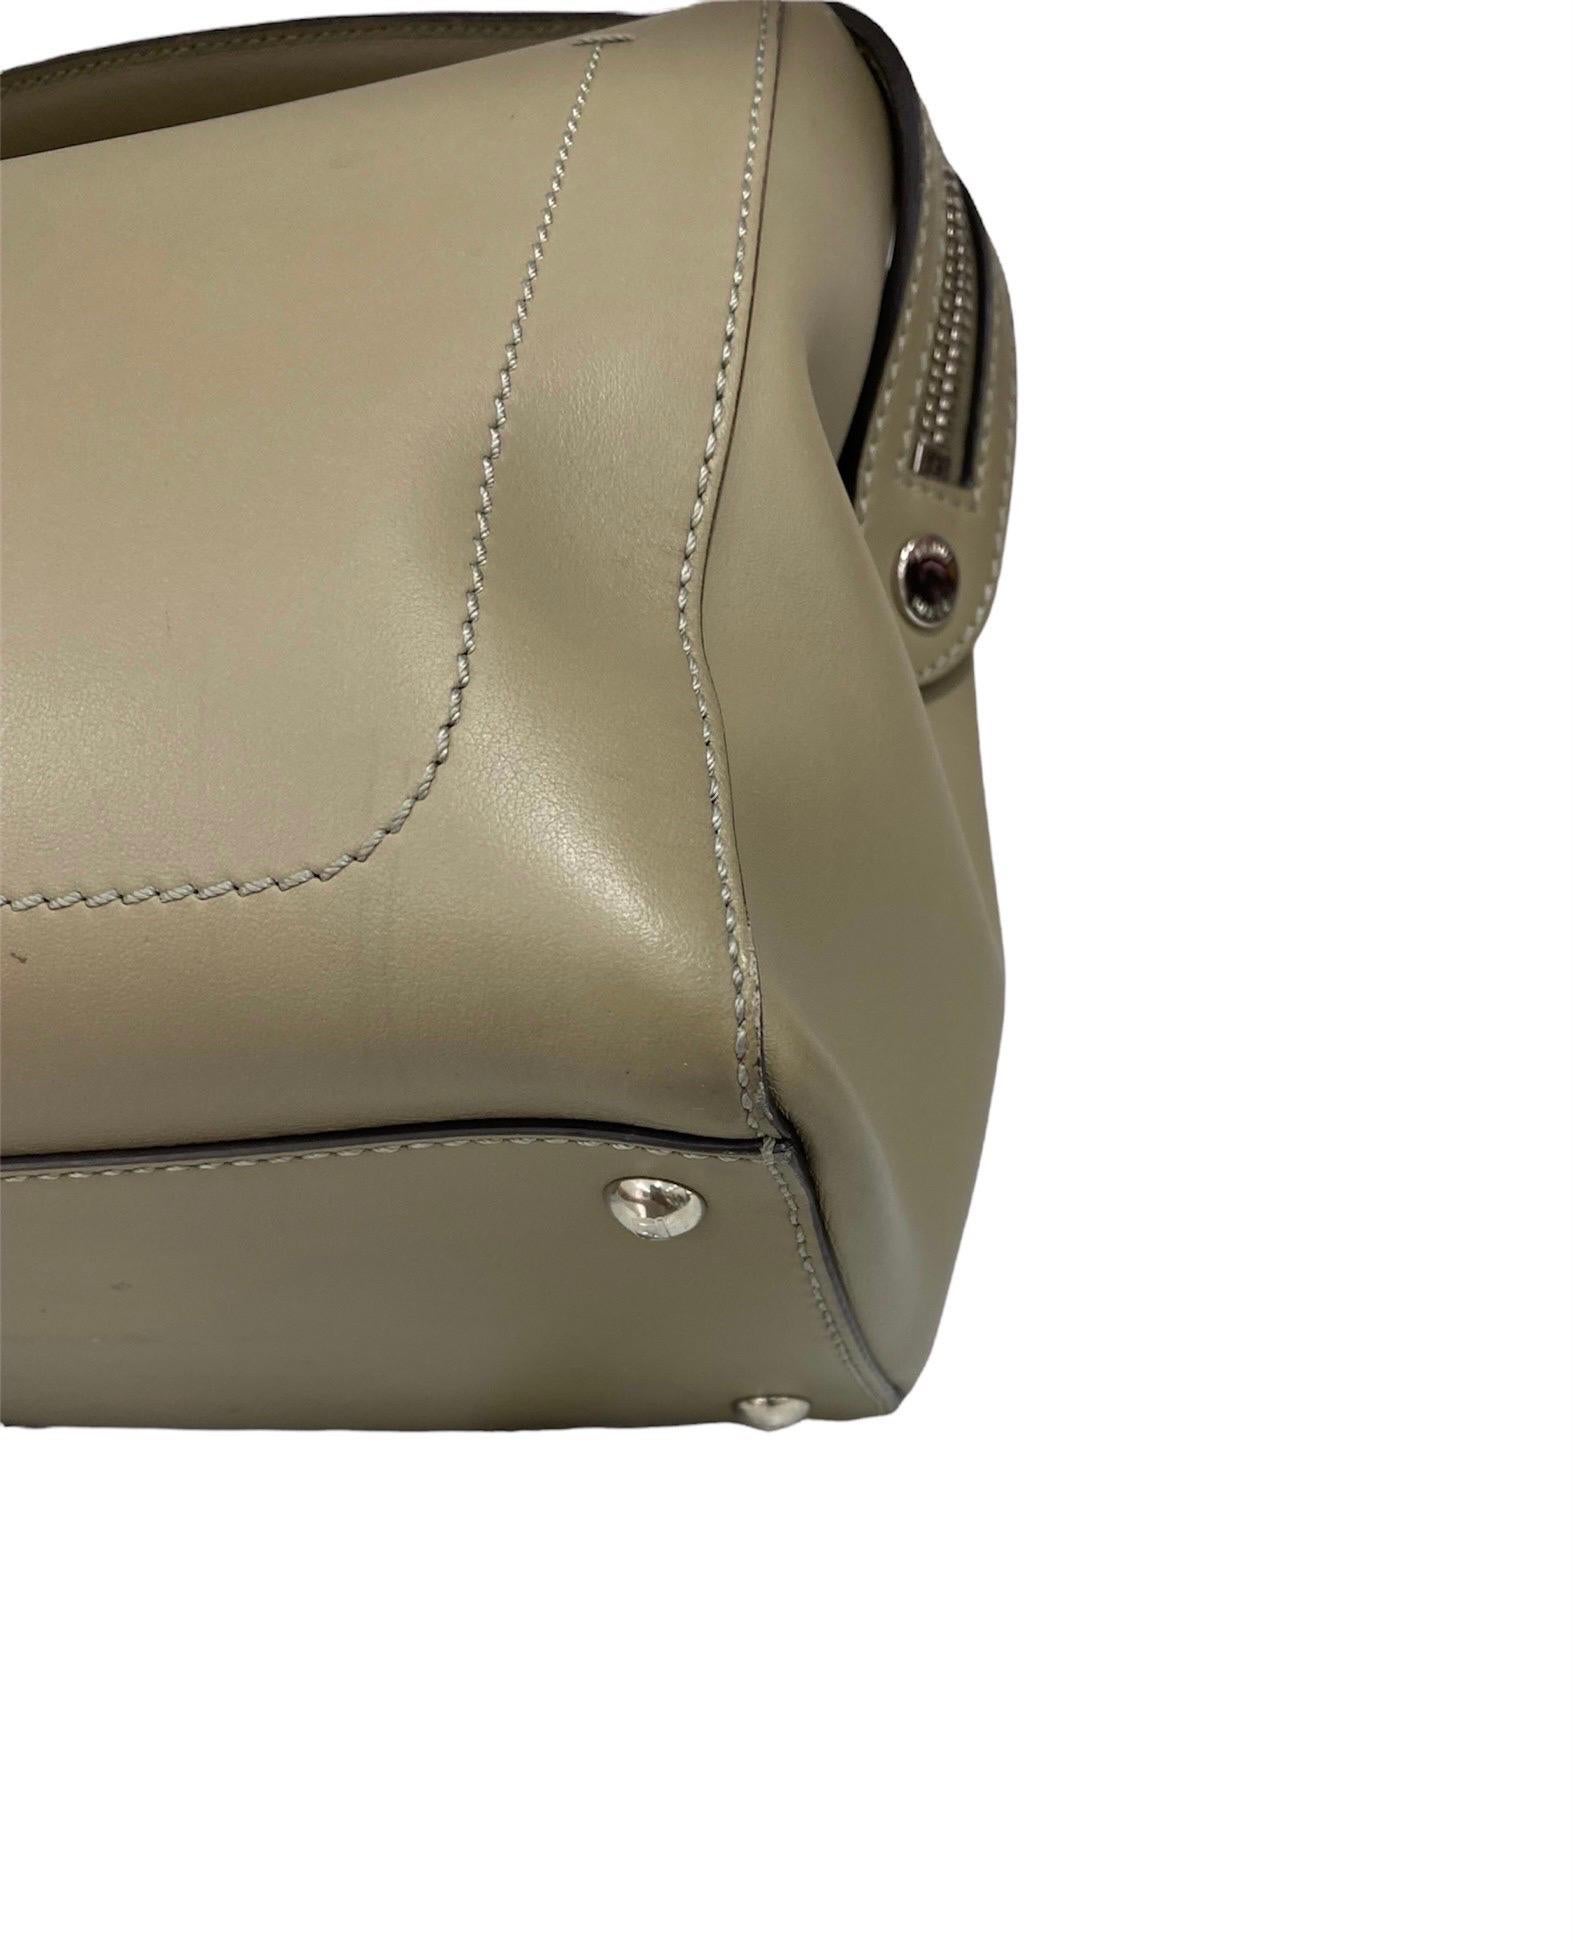 Women's Fendi Dotcom Beige Leather Shoulder Bag